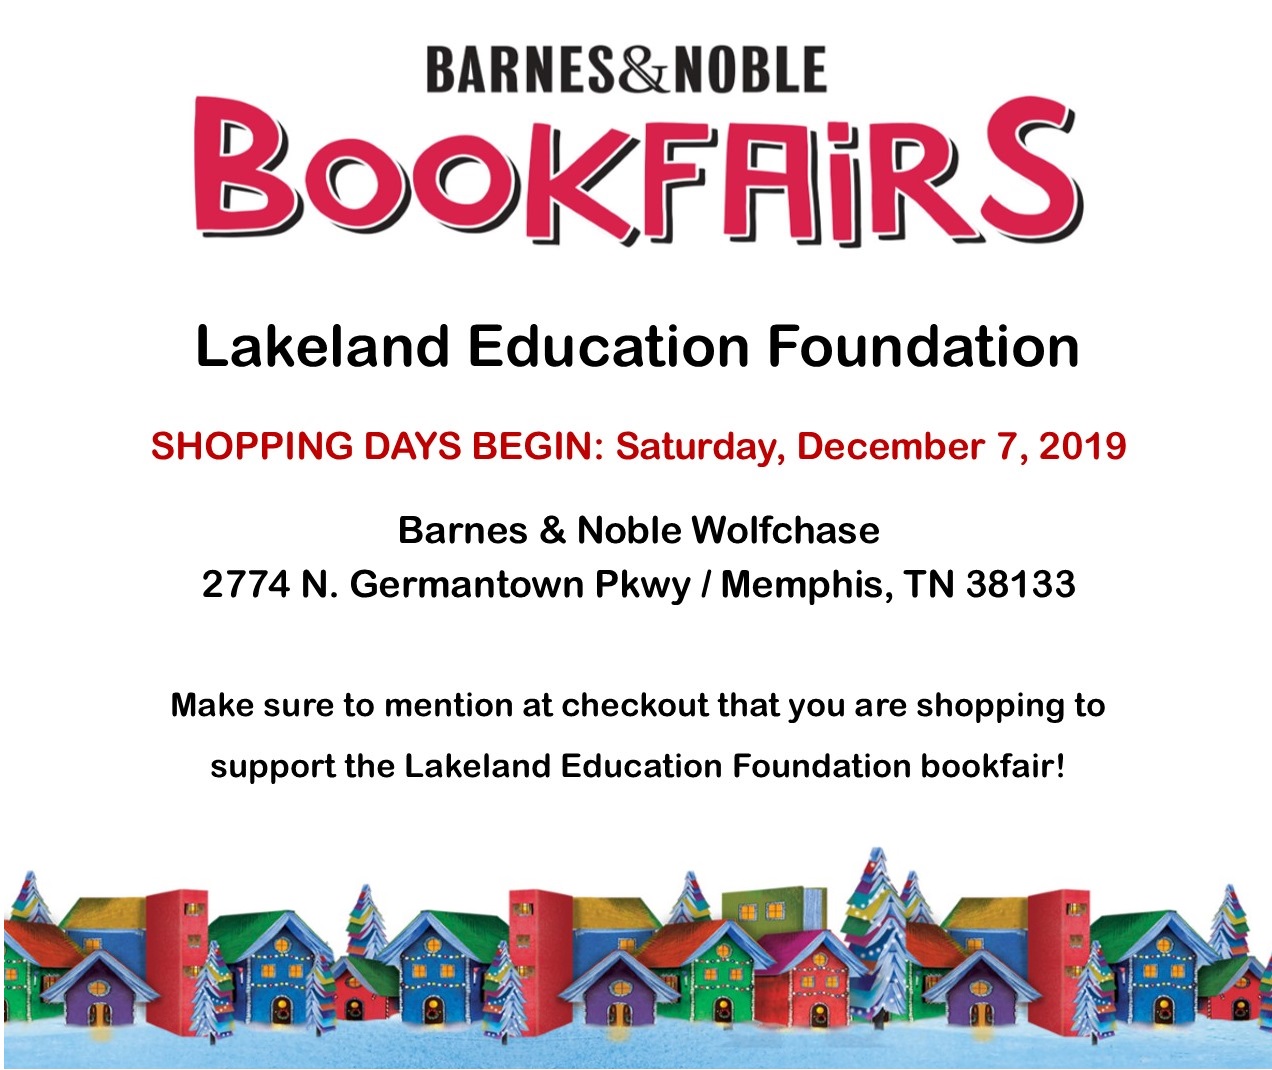 Holiday Bookfair at Barnes & Noble Lakeland Education Foundation